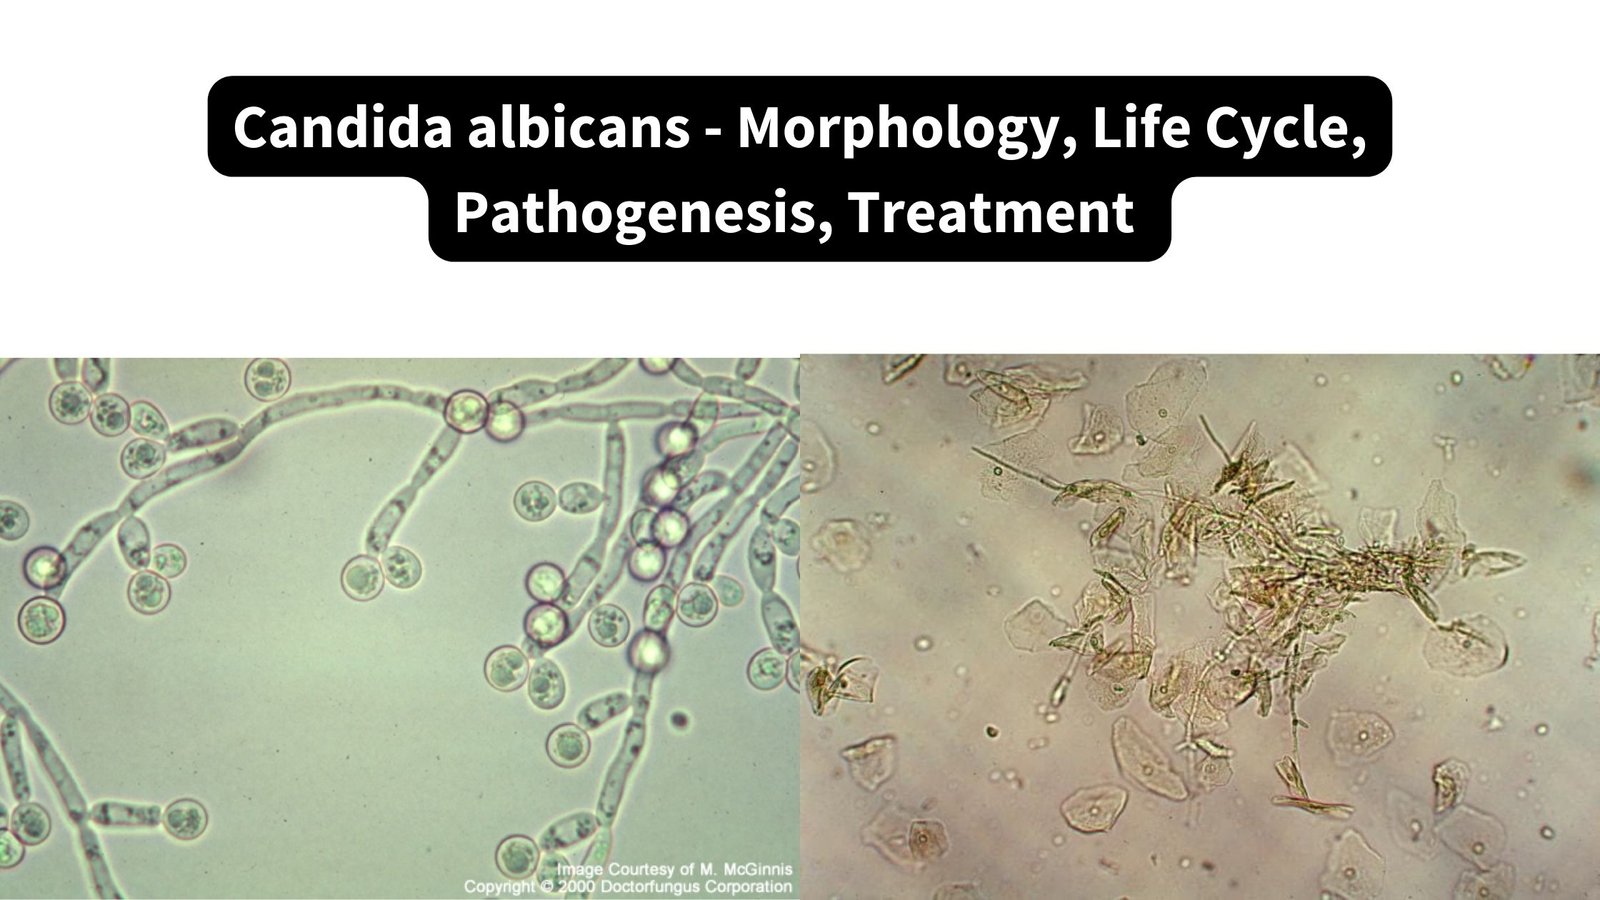 Candida albicans - Morphology, Life Cycle, Pathogenesis, Treatment